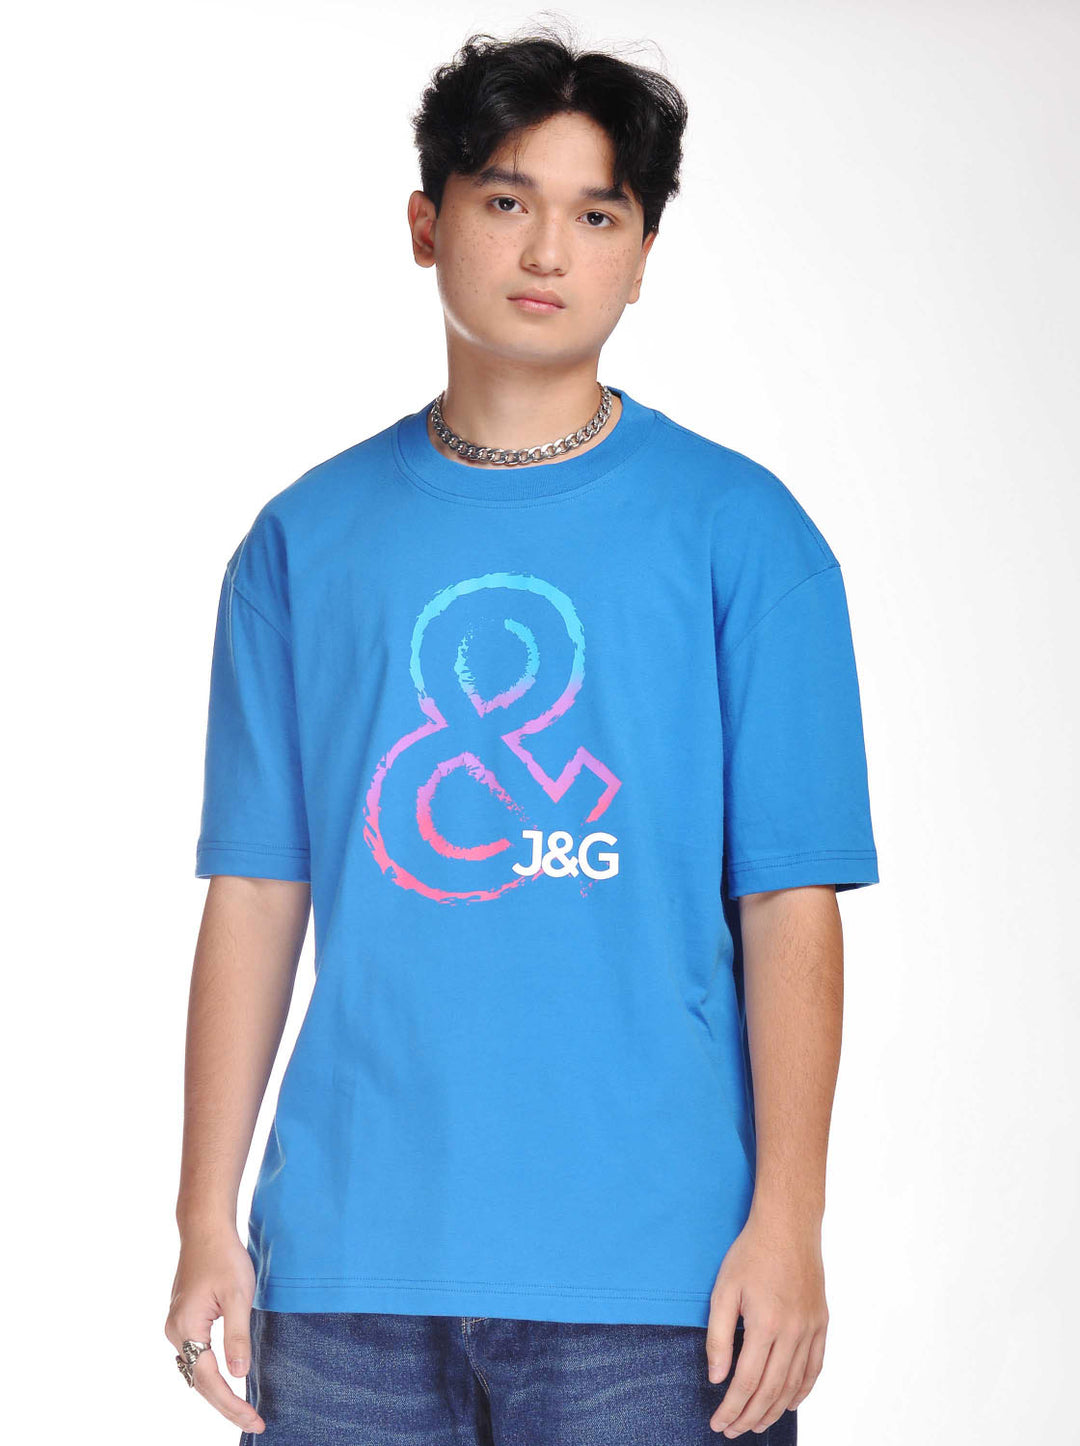 J&G Logo Tee